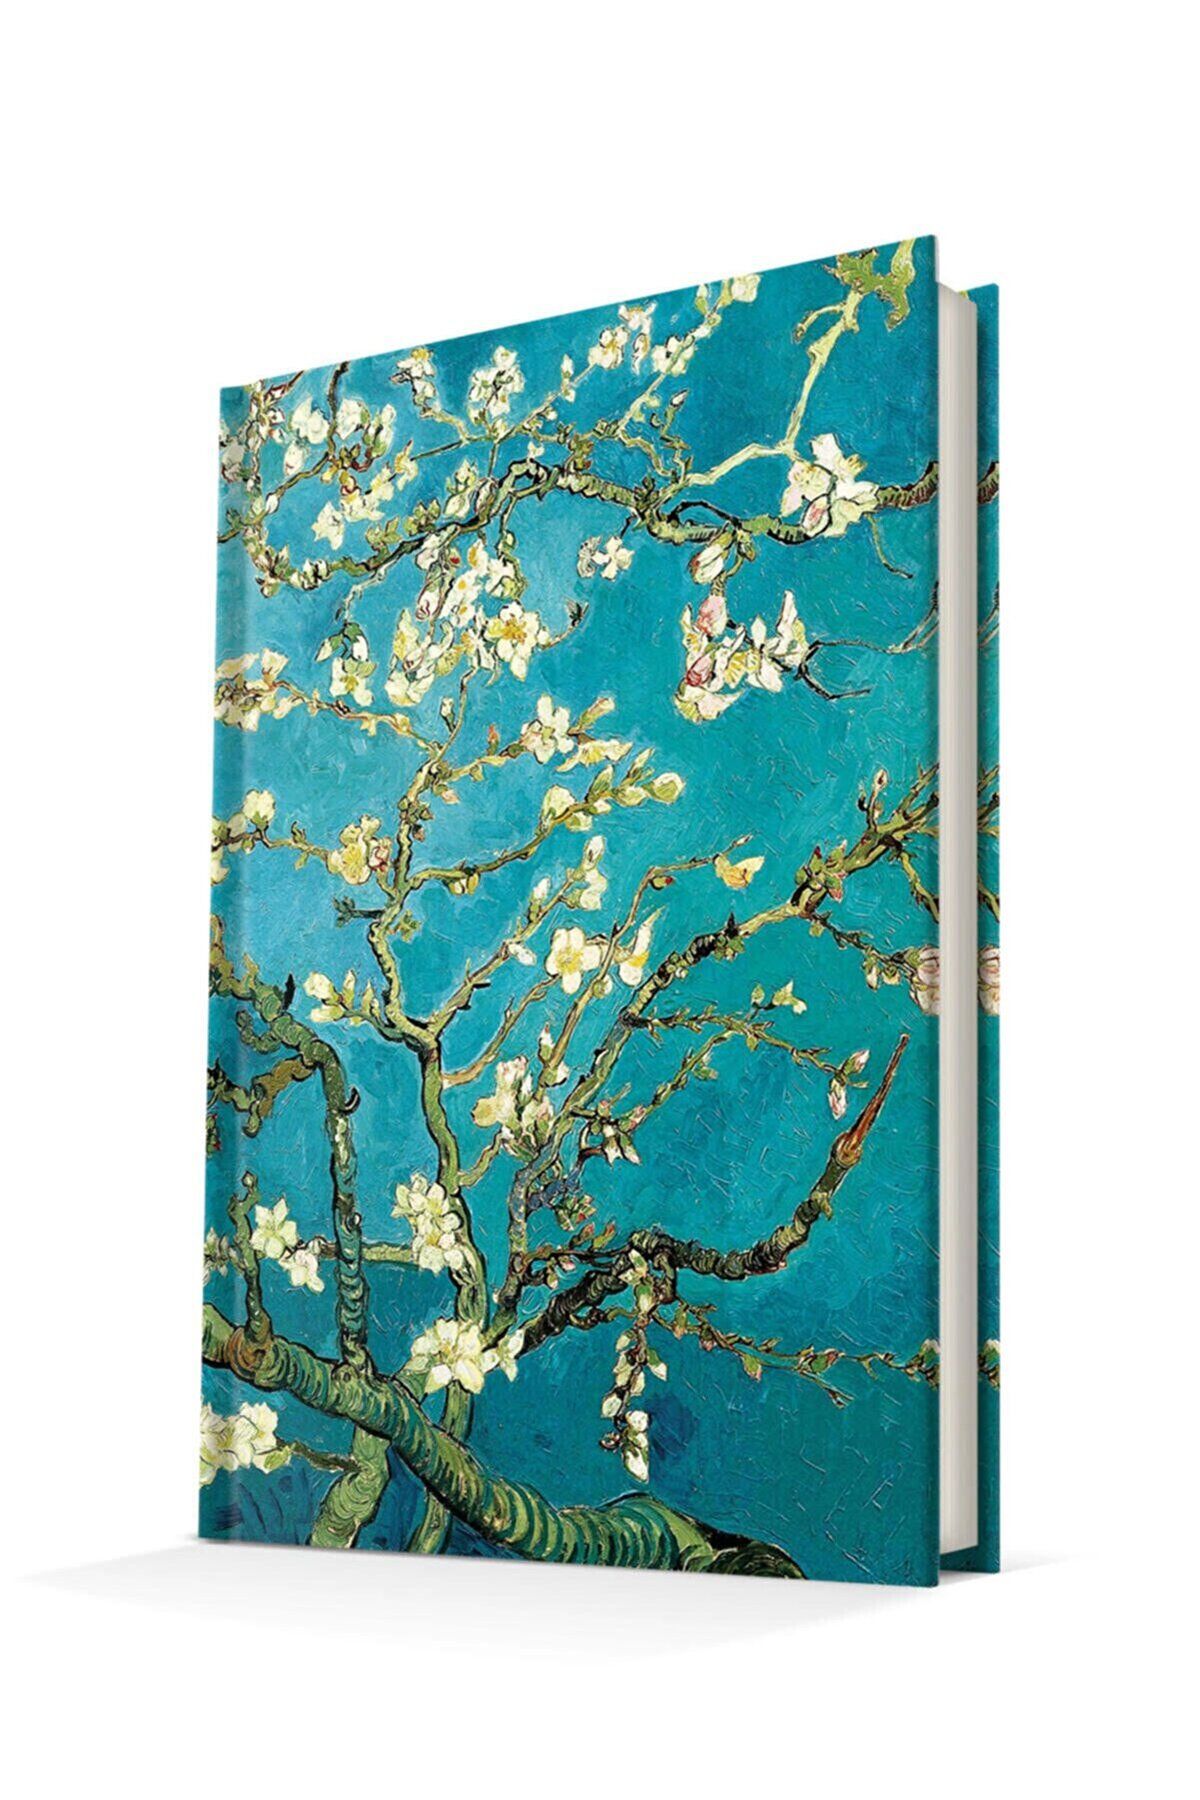 Deffter Art Of Word Van Gogh Almond Blossom